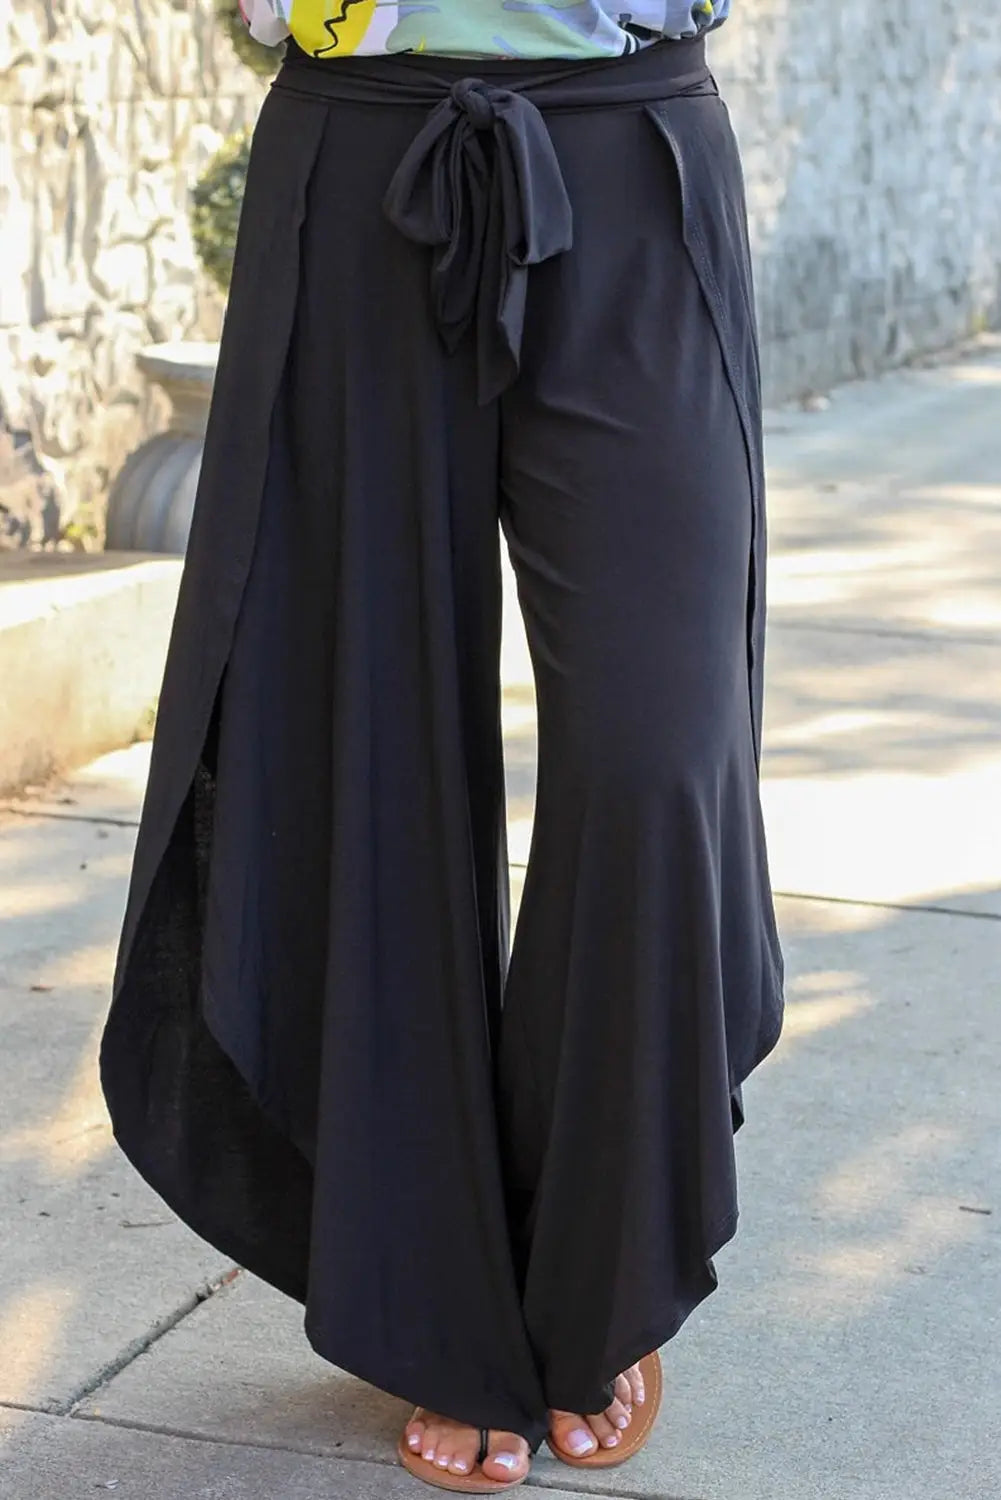 Black plus size front tie tulip wide leg pants - 1x 65% polyester + 30% viscose + 5% elastane